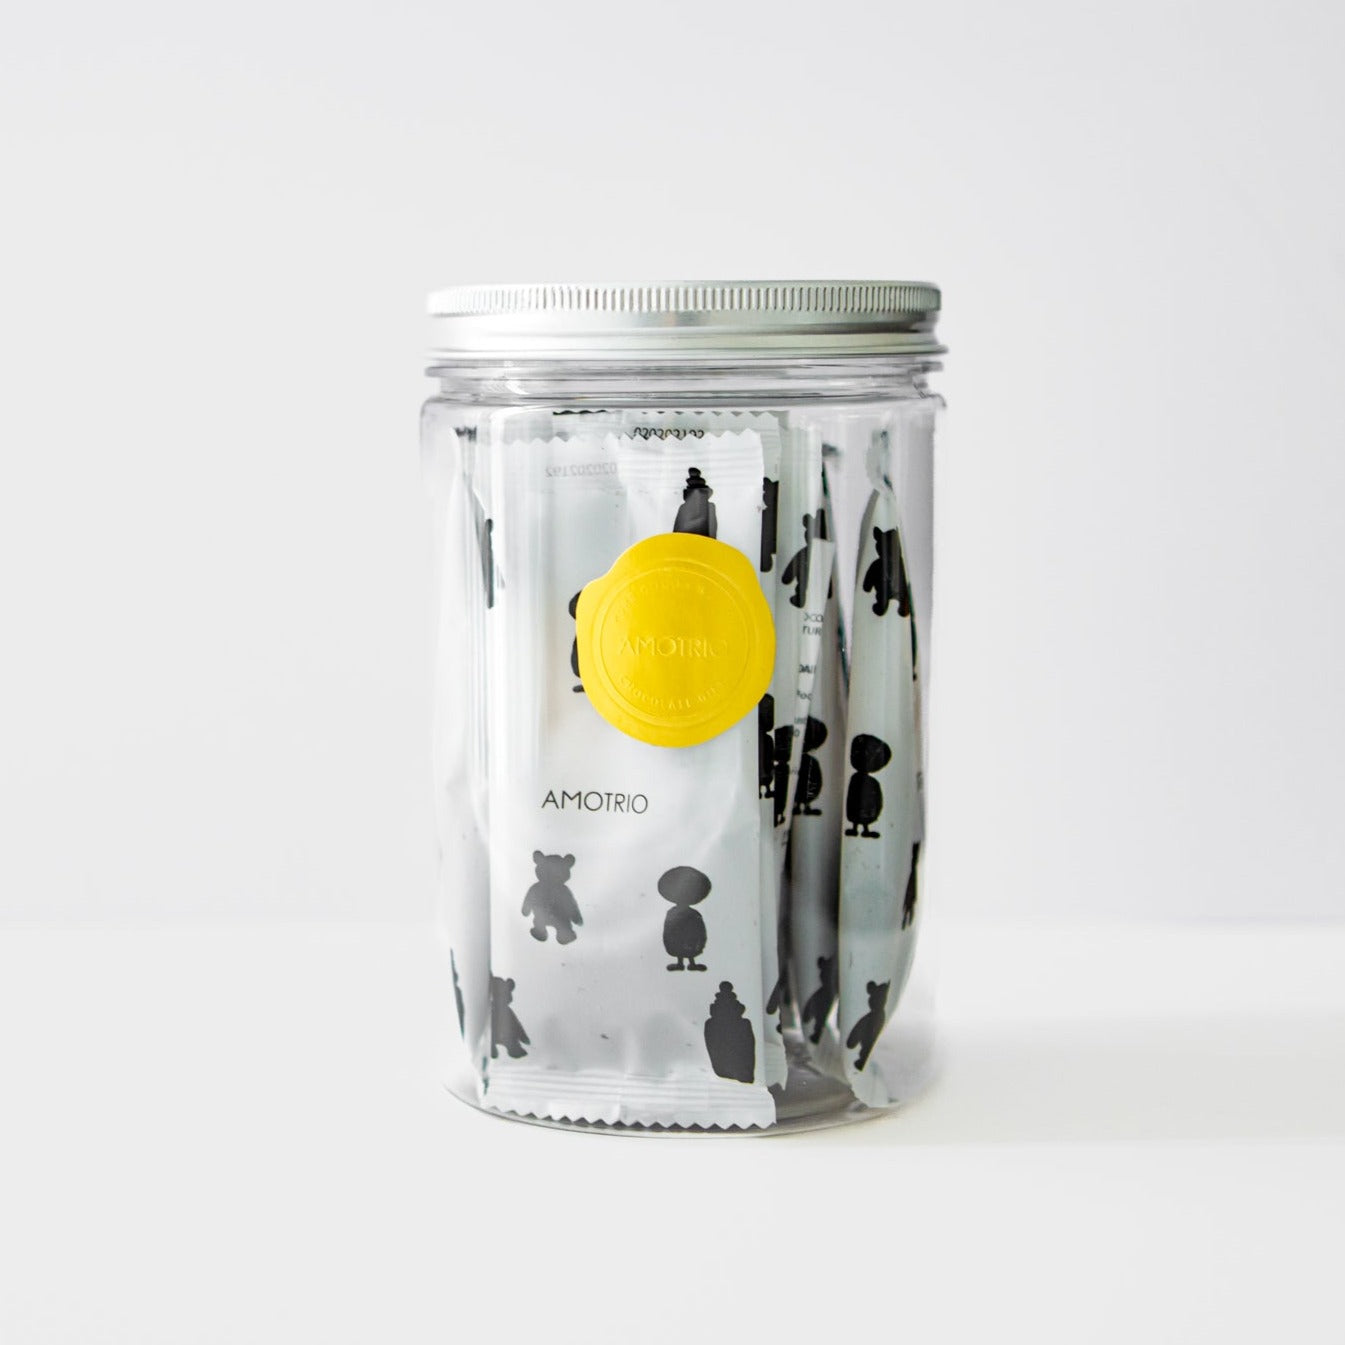 Amotrio dark chocolate lollipop bears in a jar